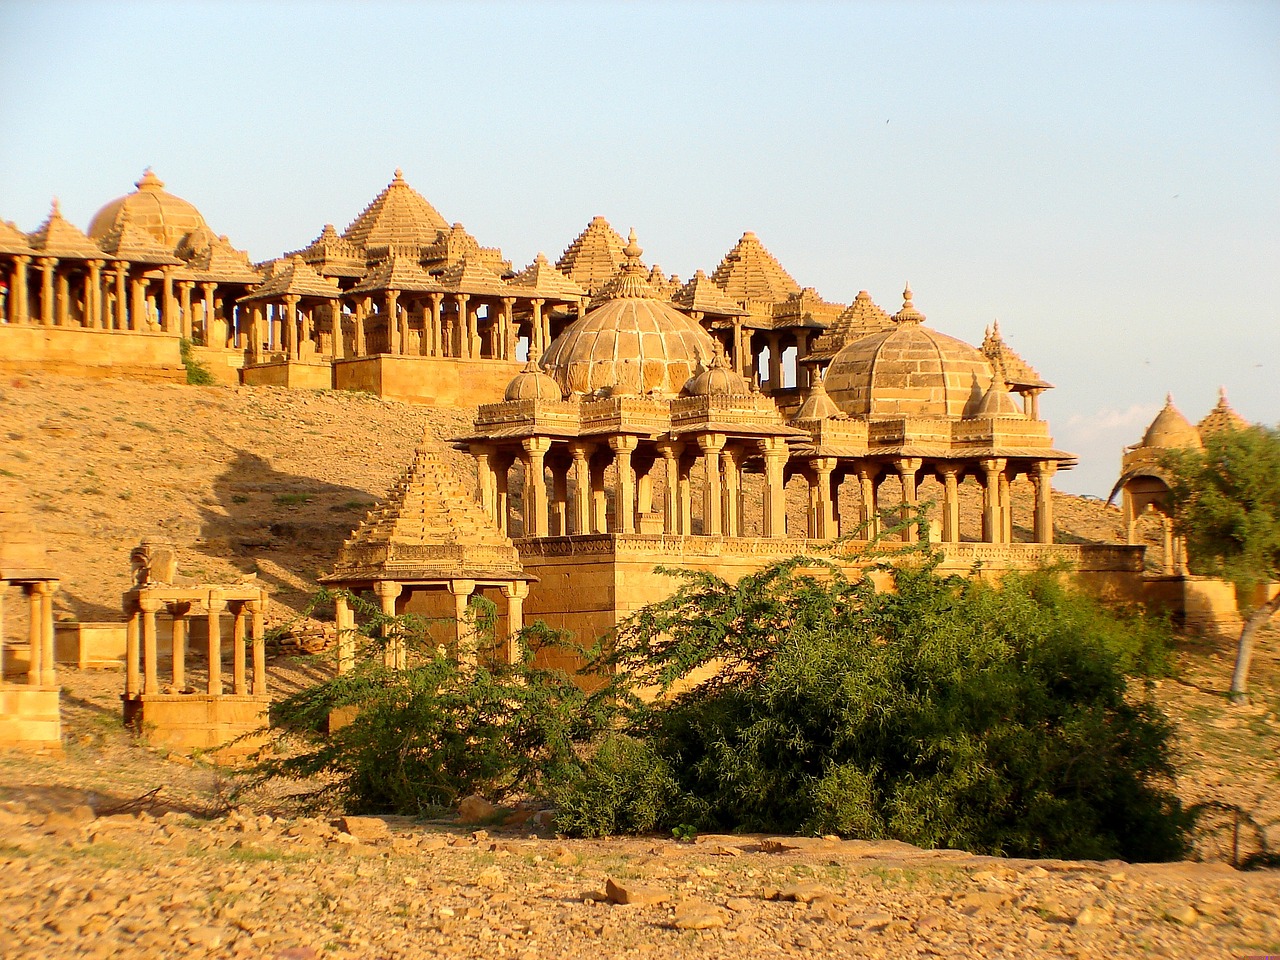 Tips for Visiting Jaisalmer